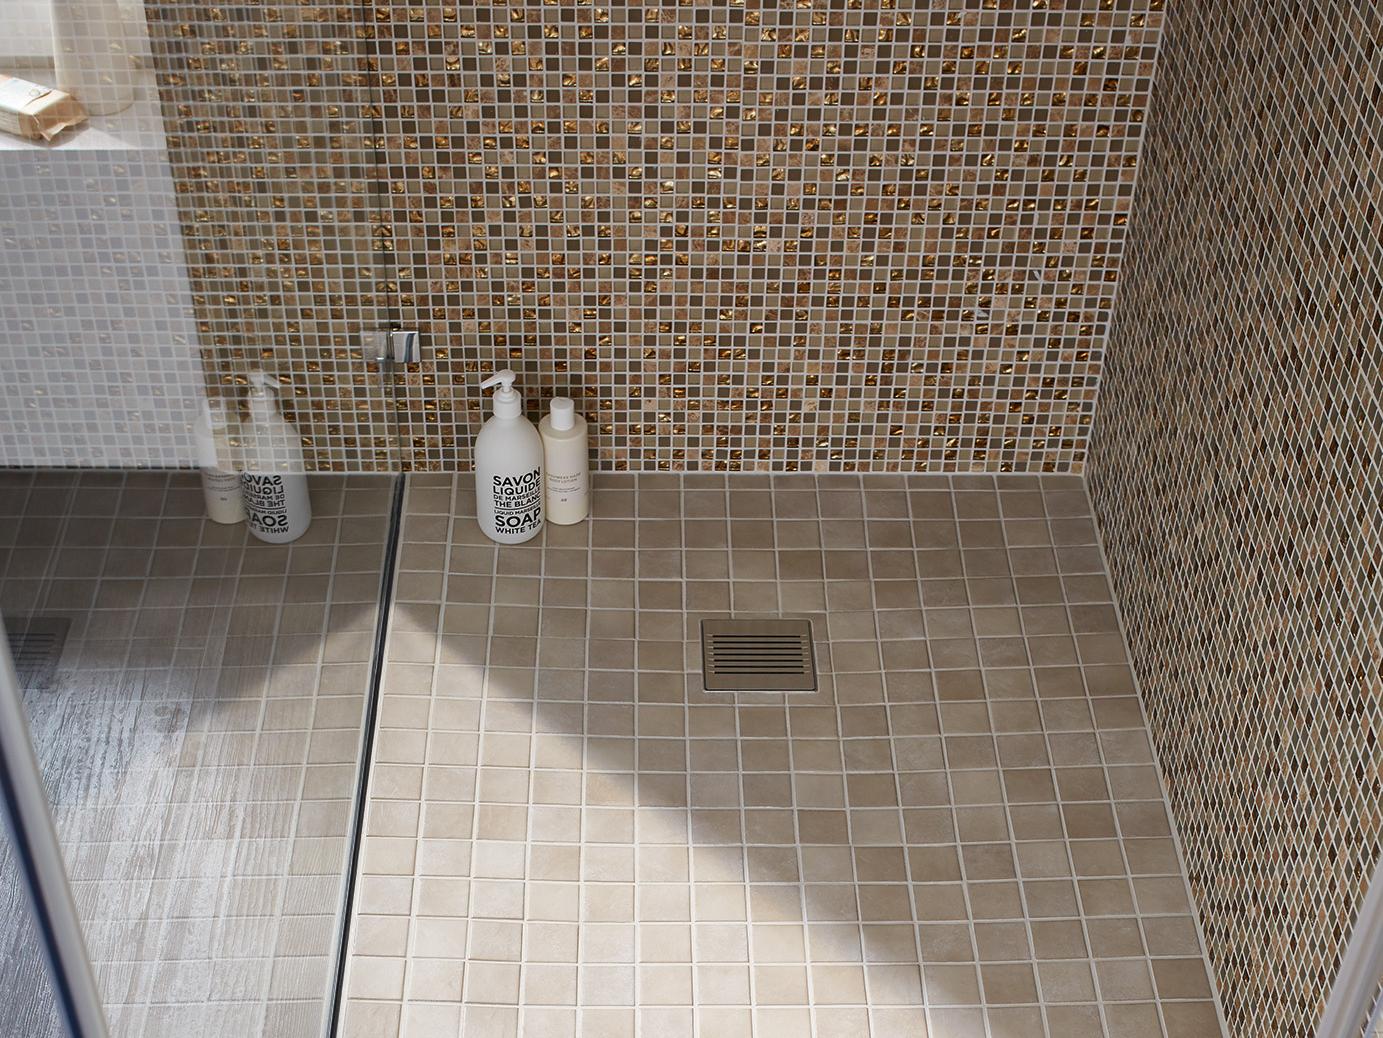 Kermi shower board with POINT point drain, barrier-free